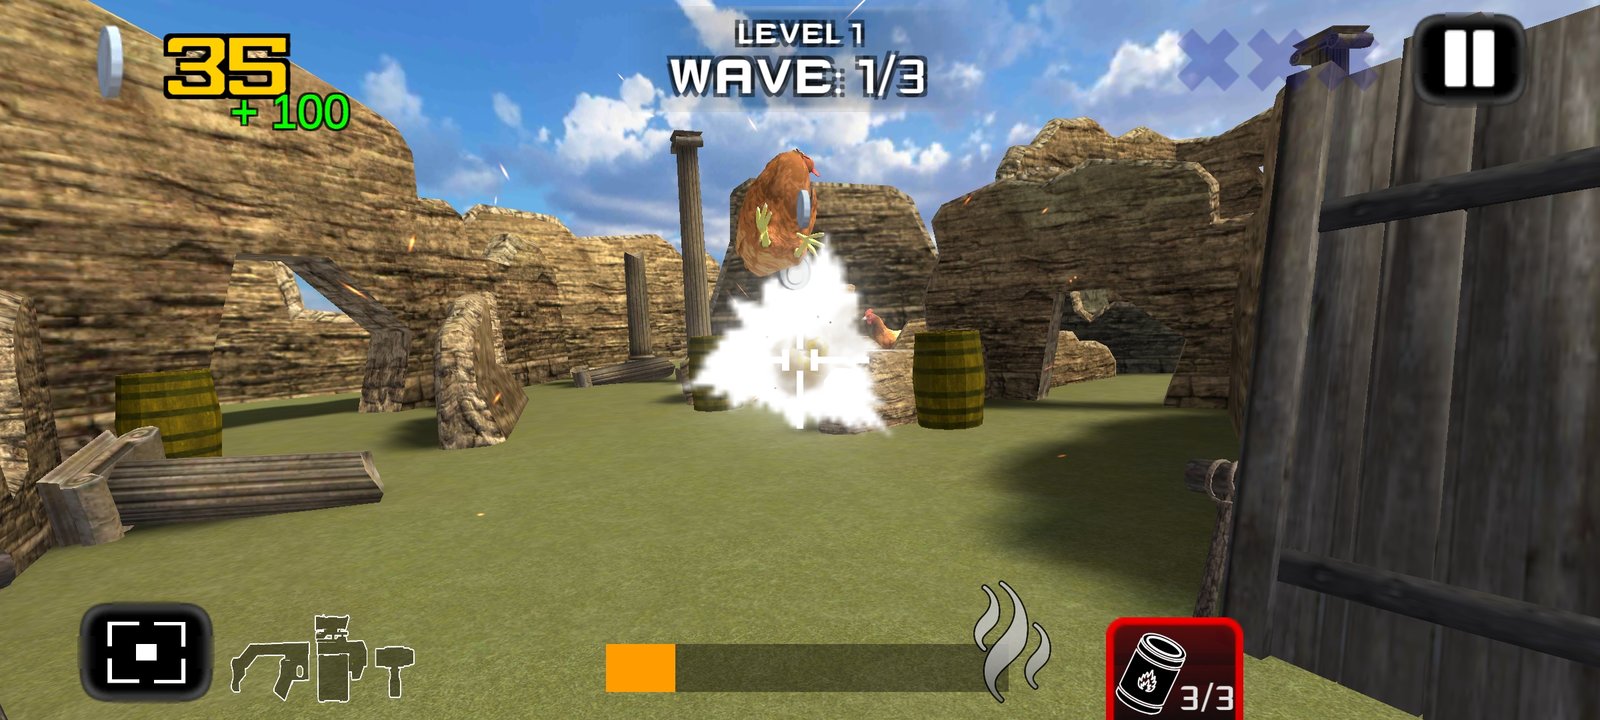 Chicken Gun Mod Menu v3.4.0 Unlock All, God Mode, Max Level